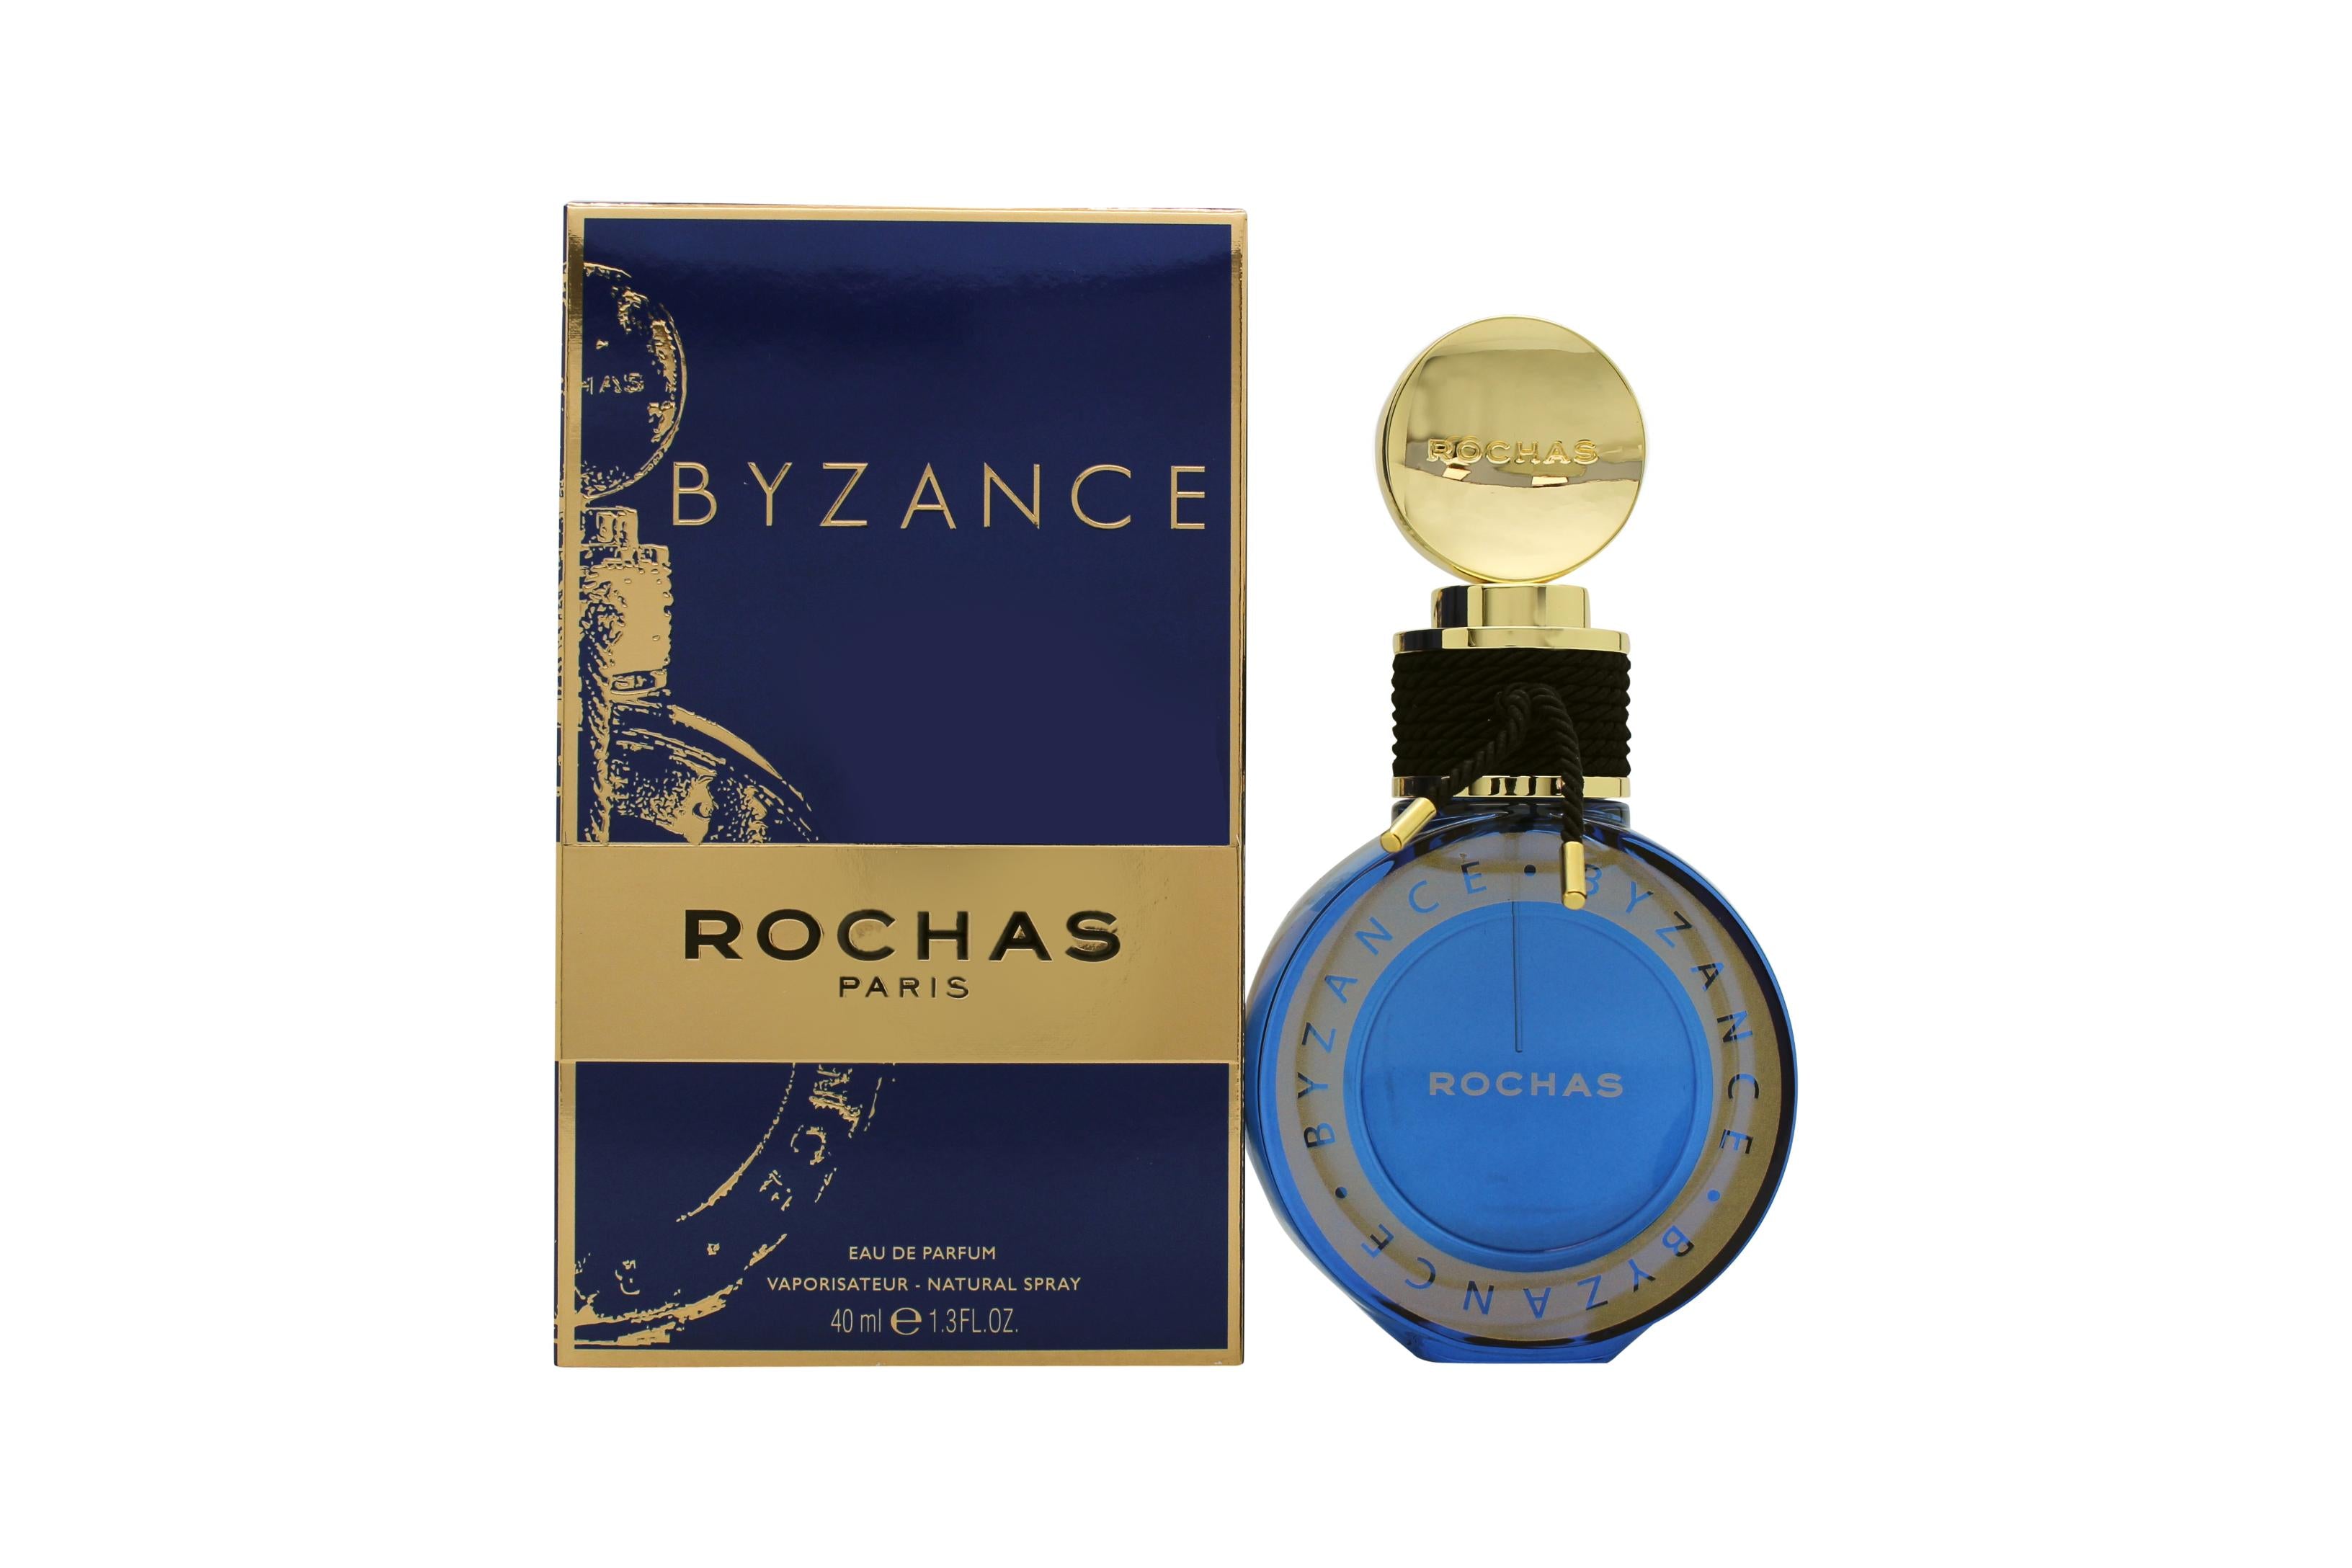 View Rochas Byzance 2019 Eau de Parfum 40ml Sprej information